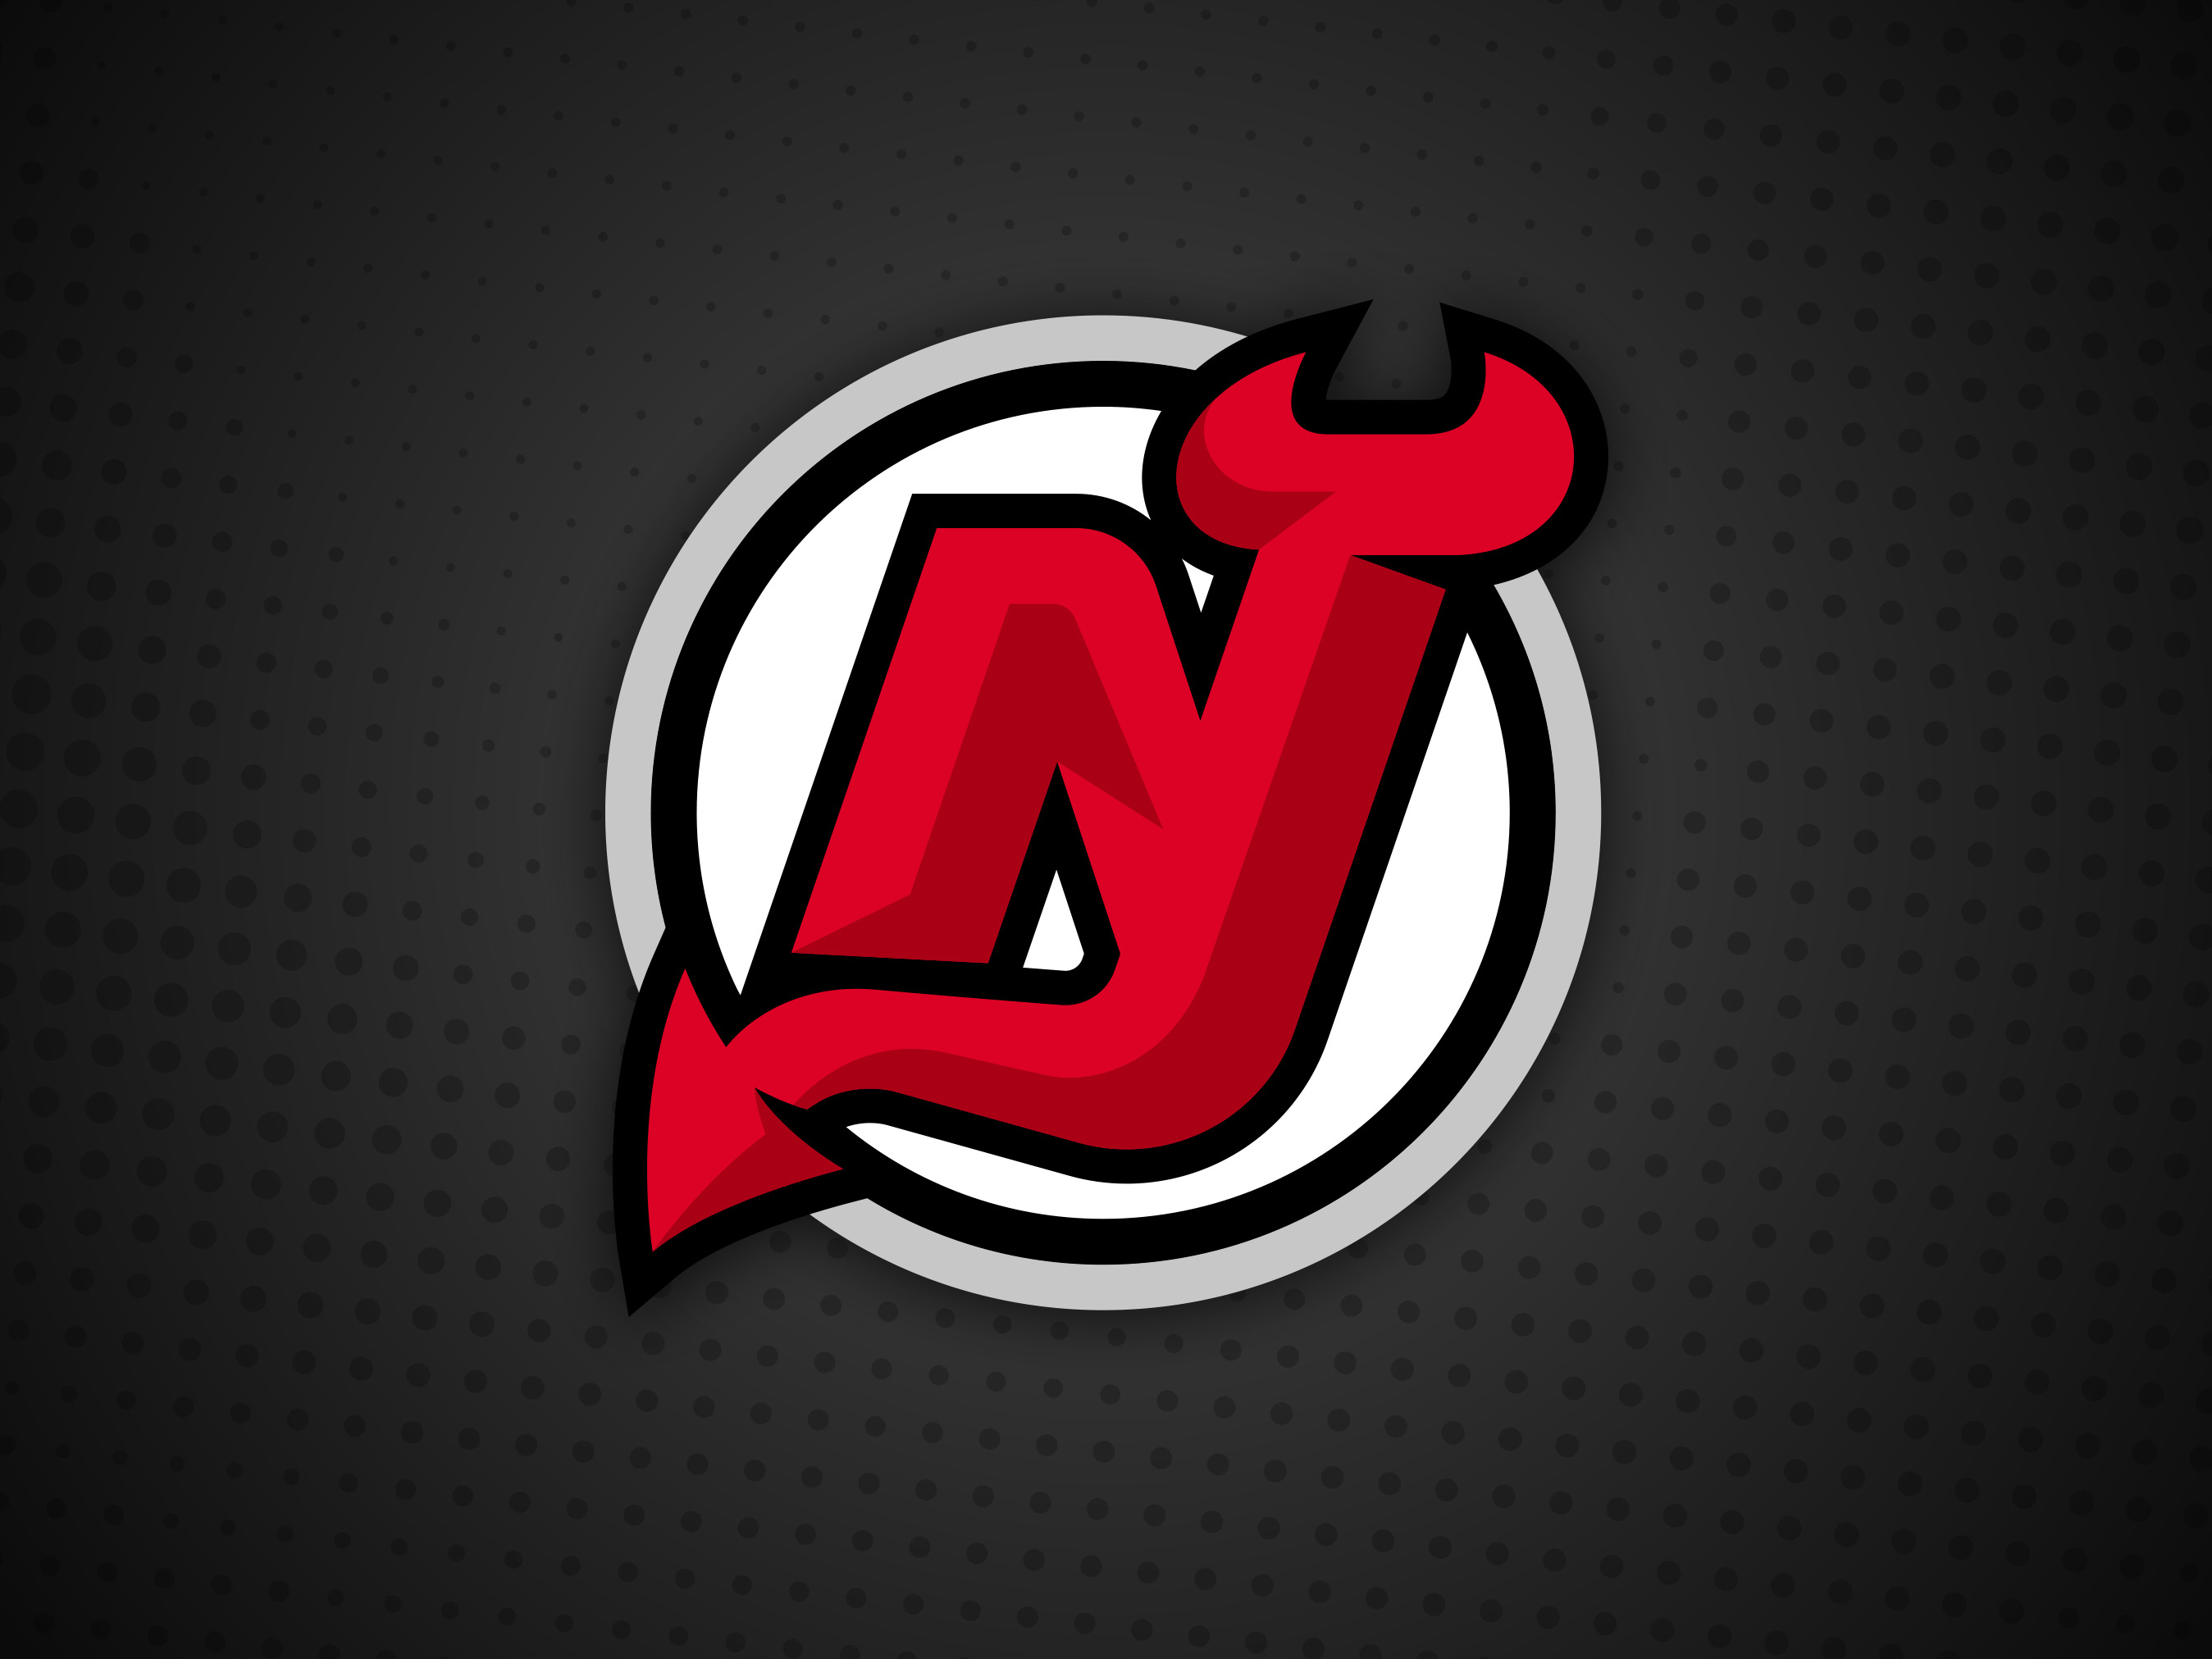 New jersey devils. Нью джерси Девилз. Нью-джерси Девилз логотип. НХЛ Нью-джерси Девилз логотип. Хк Нью джерси логотип.